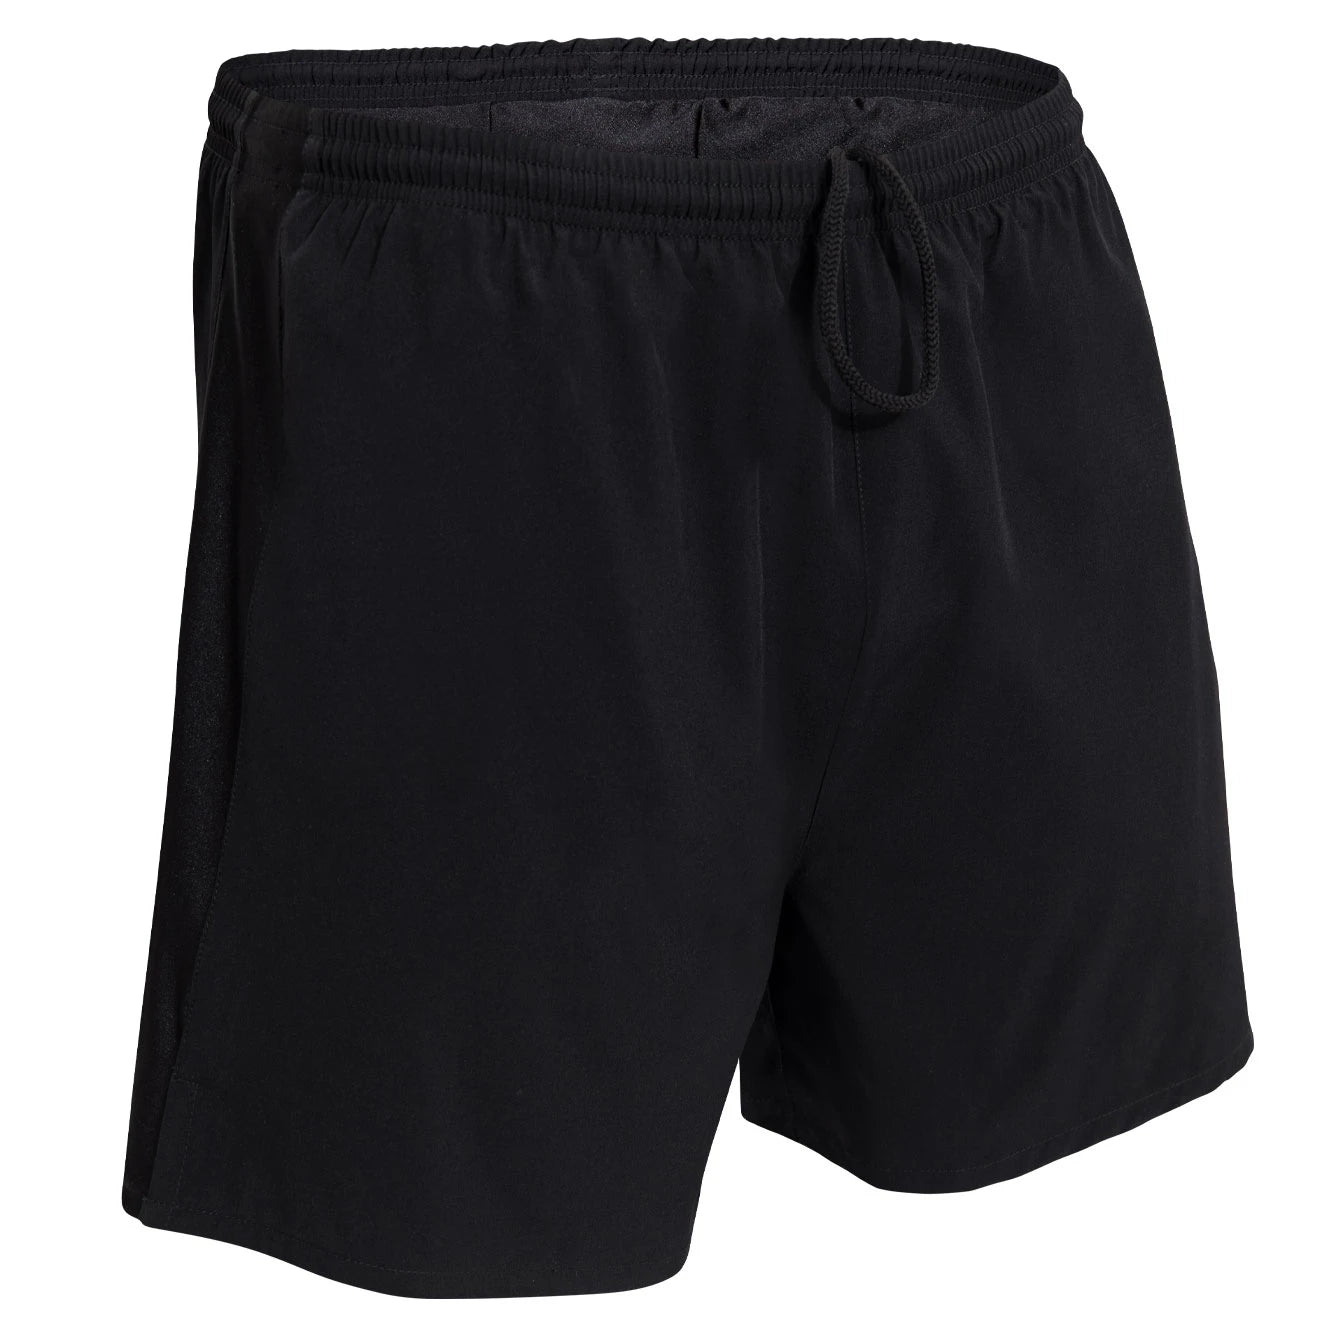 Training Shorts in Slate Grey/Black - TAILORED ATHLETE - USA